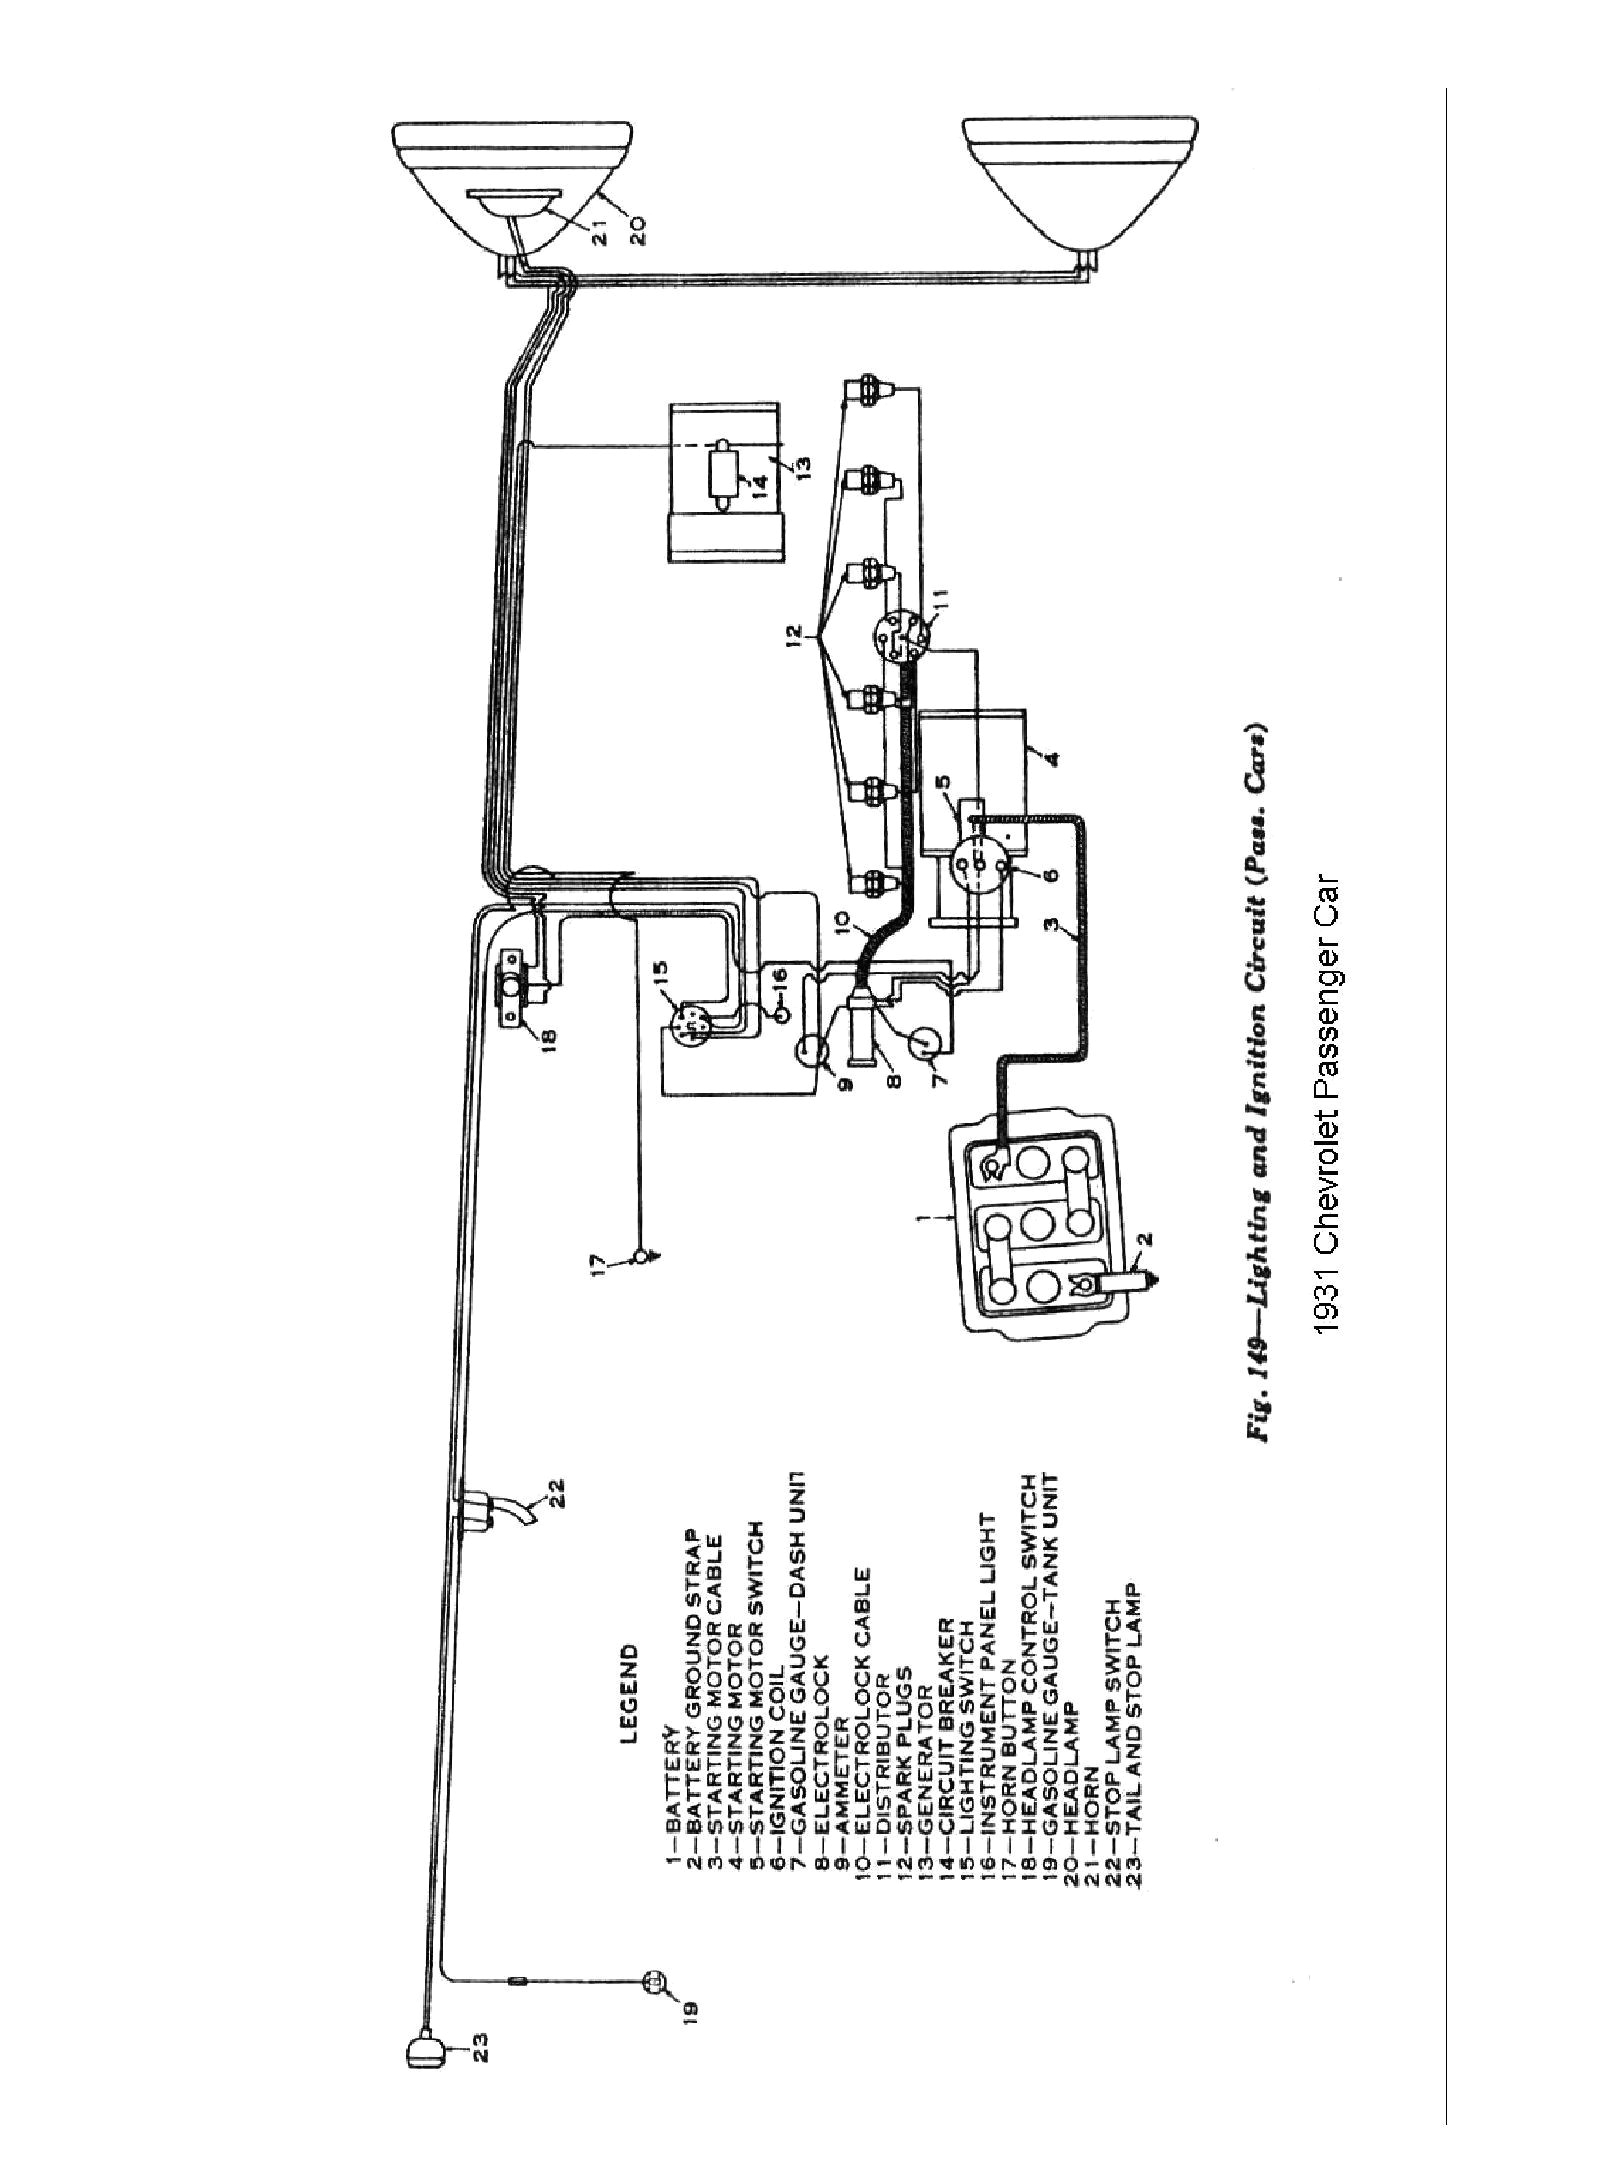 1962 cadillac ignition coil diagram wiring diagram go cadillac distributor diagram wiring diagram week 1962 cadillac